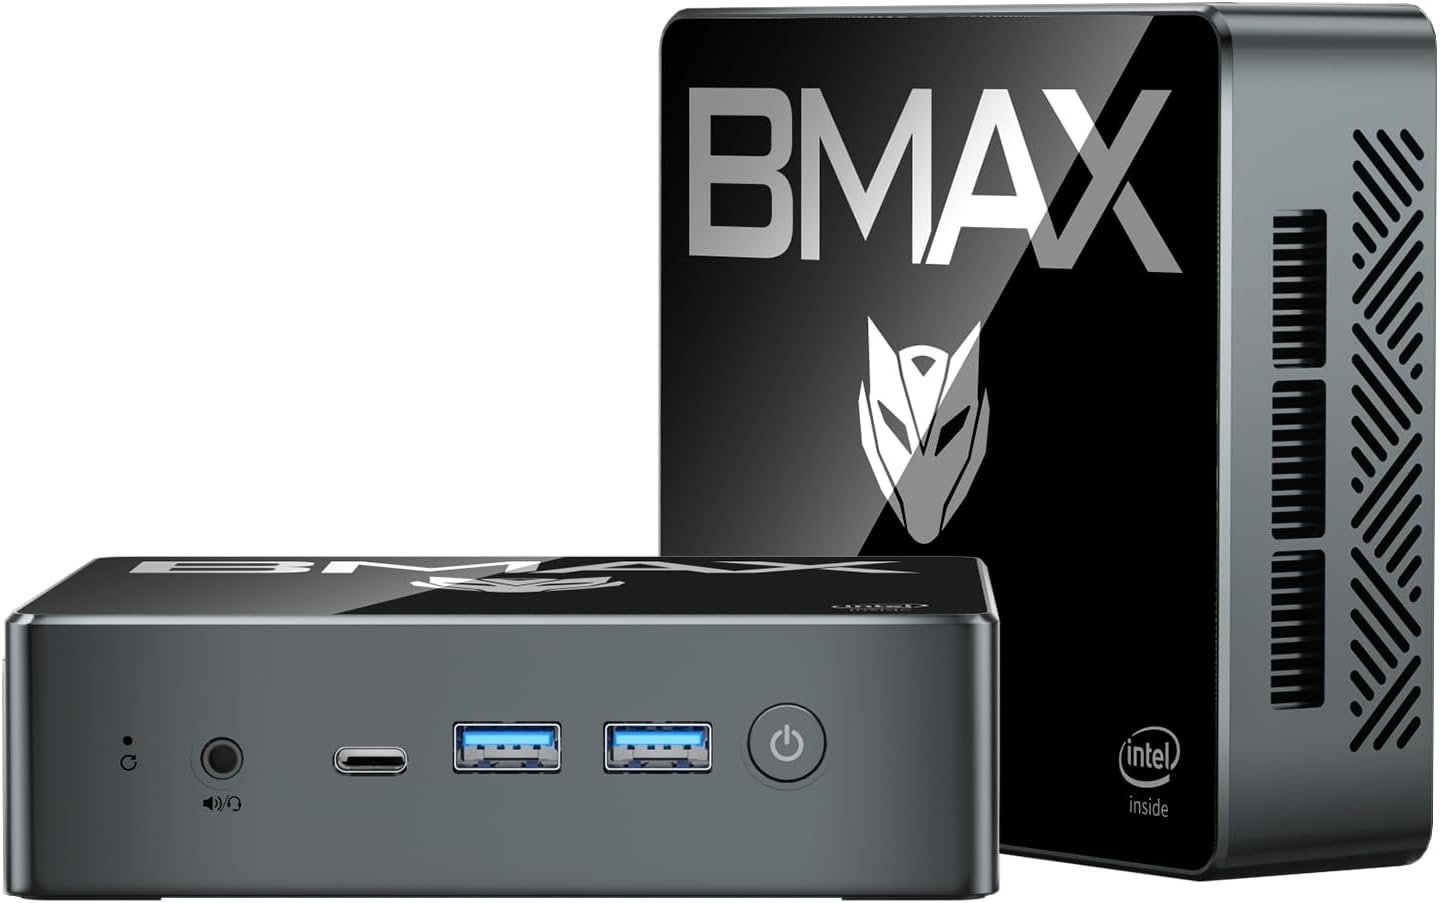 Bmax B4 Plus Micro Computer 12th Gen Intel N100 4C/4T 16GB DDR4 RAM/512GB SSD Small PC Support Ubuntu, WiFi 5 4K 60Hz UHD Graphics Three Display/BT 4.2/HDMI 2.0 ×2/Full Features Type-C